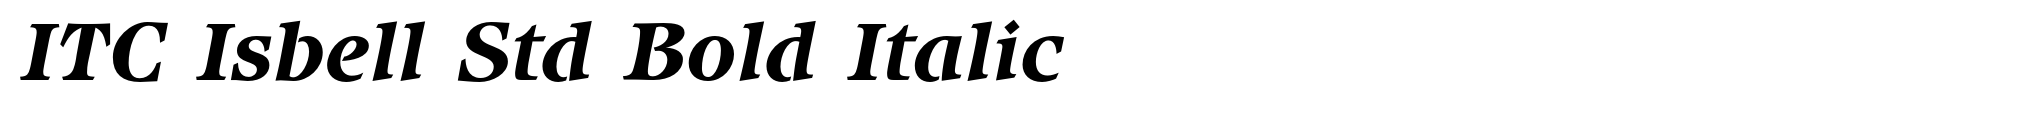 ITC Isbell Std Bold Italic image